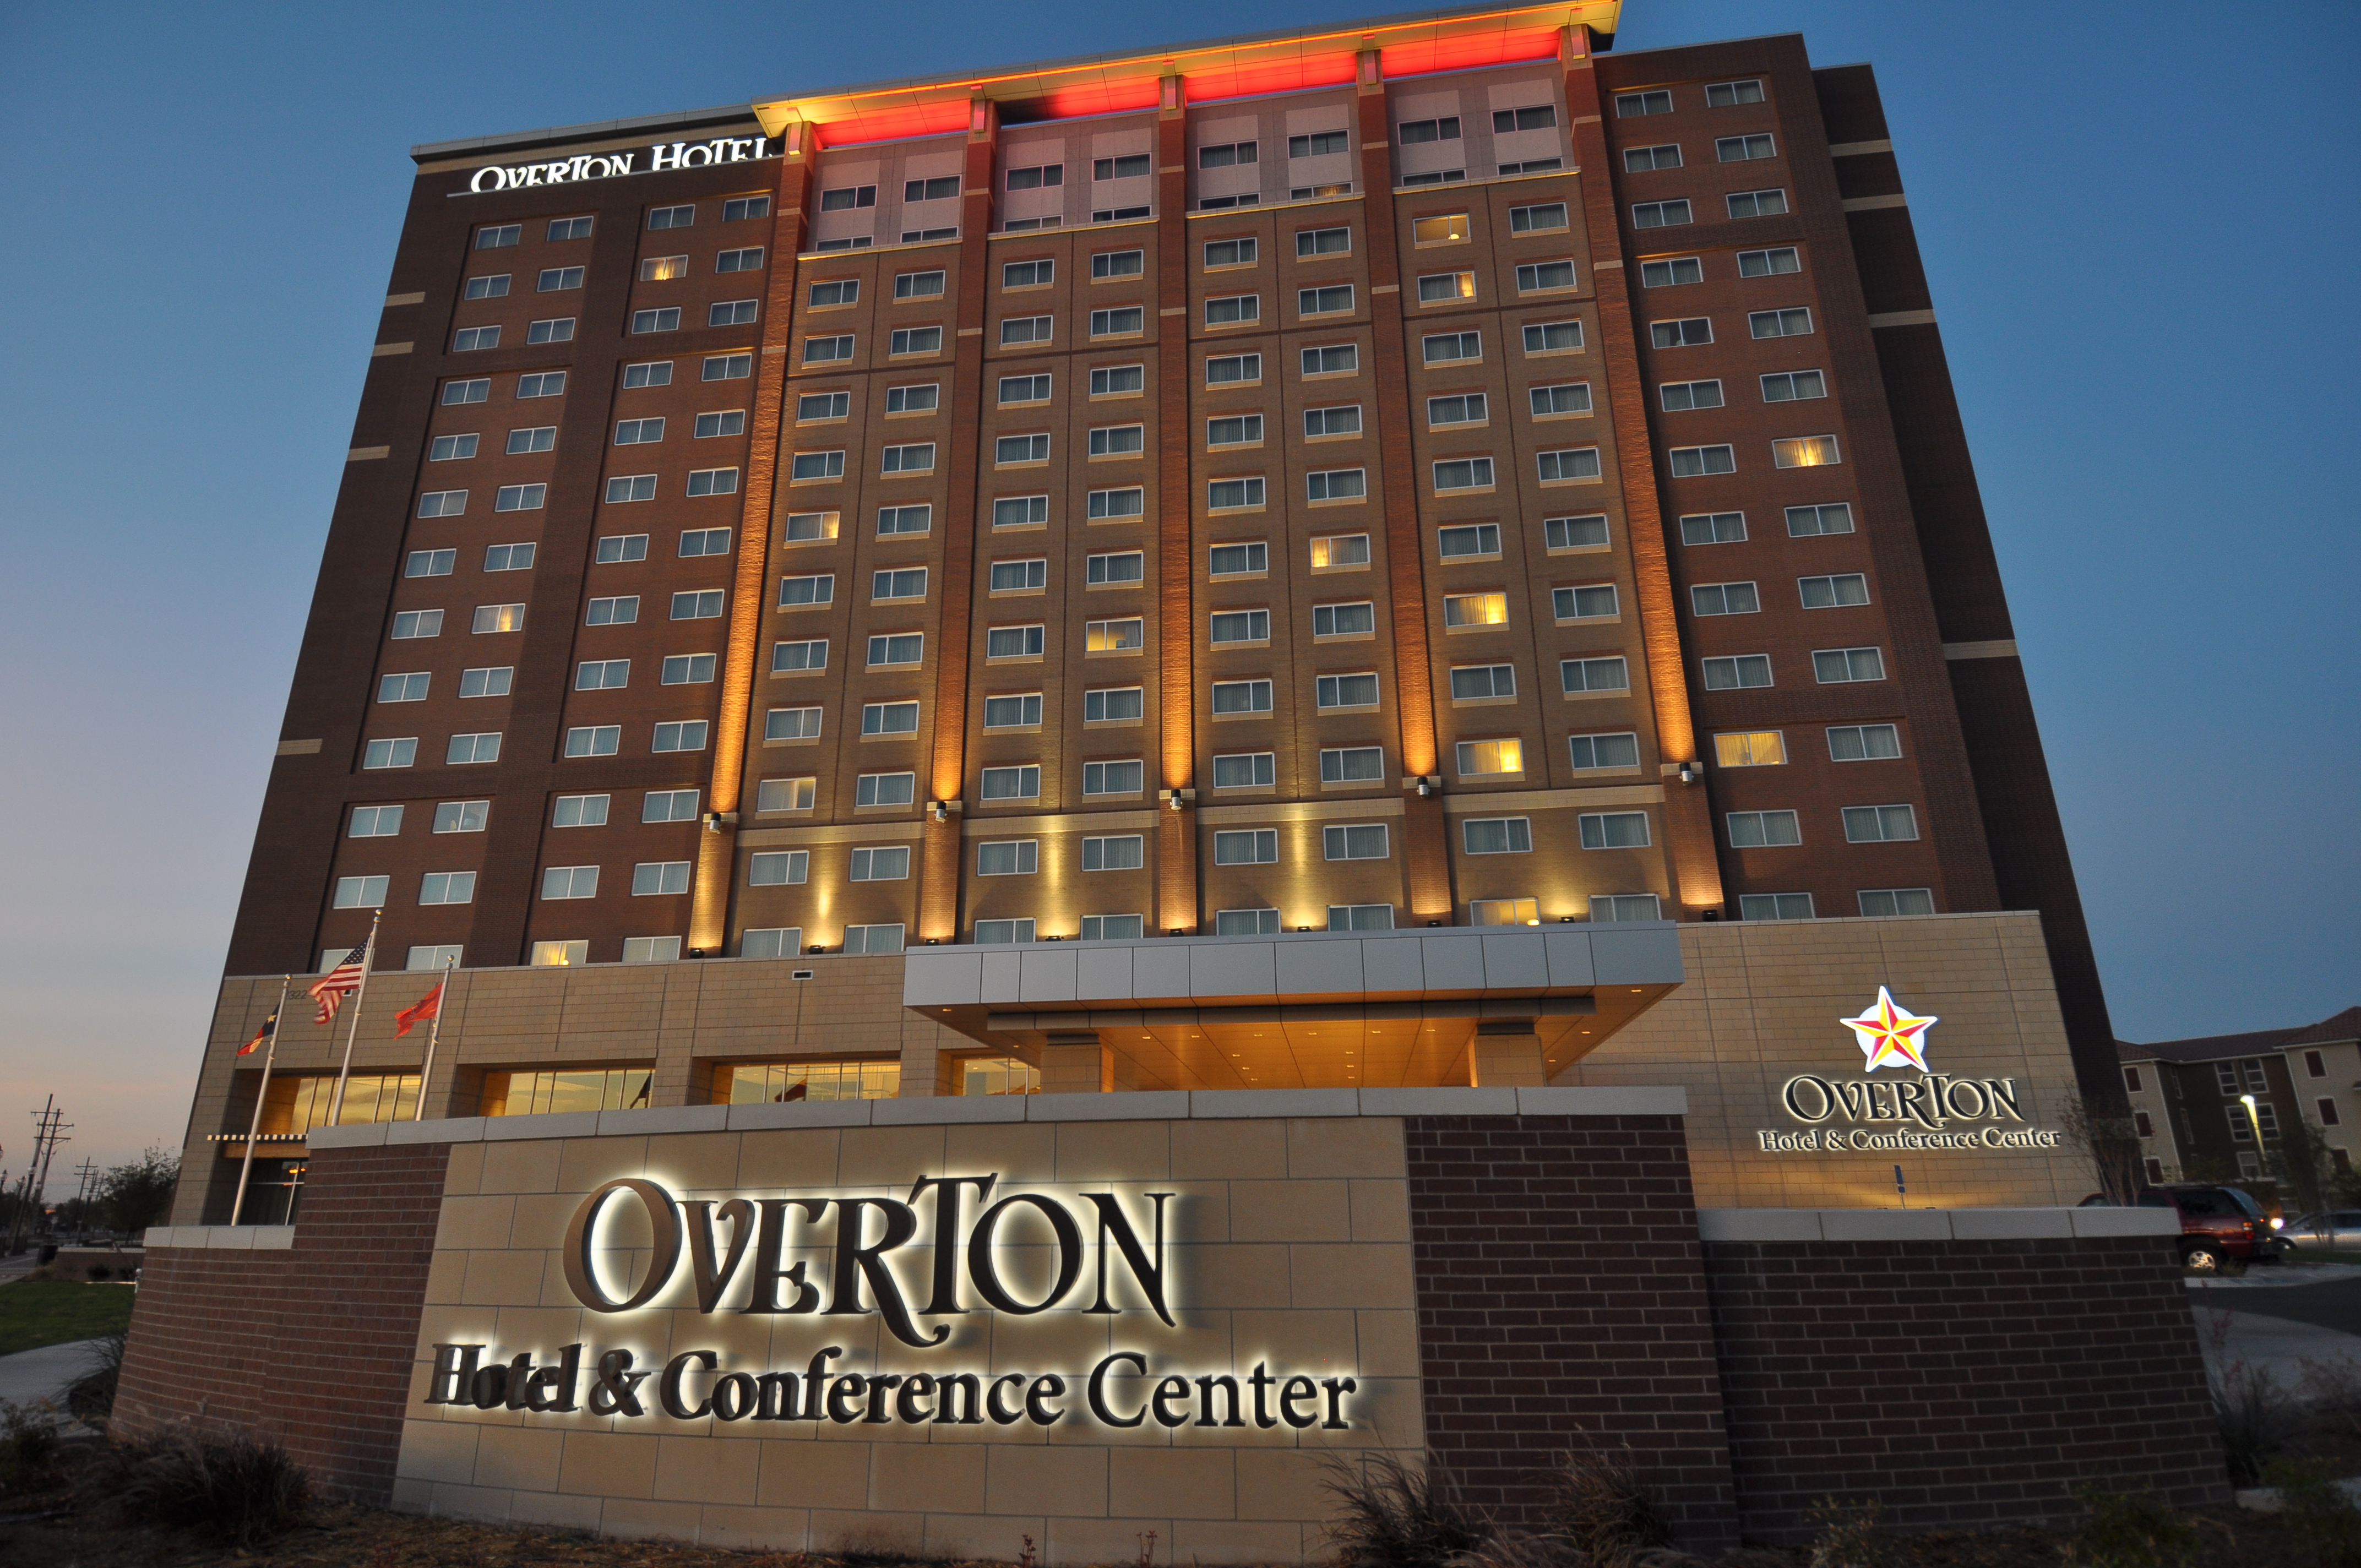  1859 Historic Hotels Ltd | Overton Hotel & Conference Center category